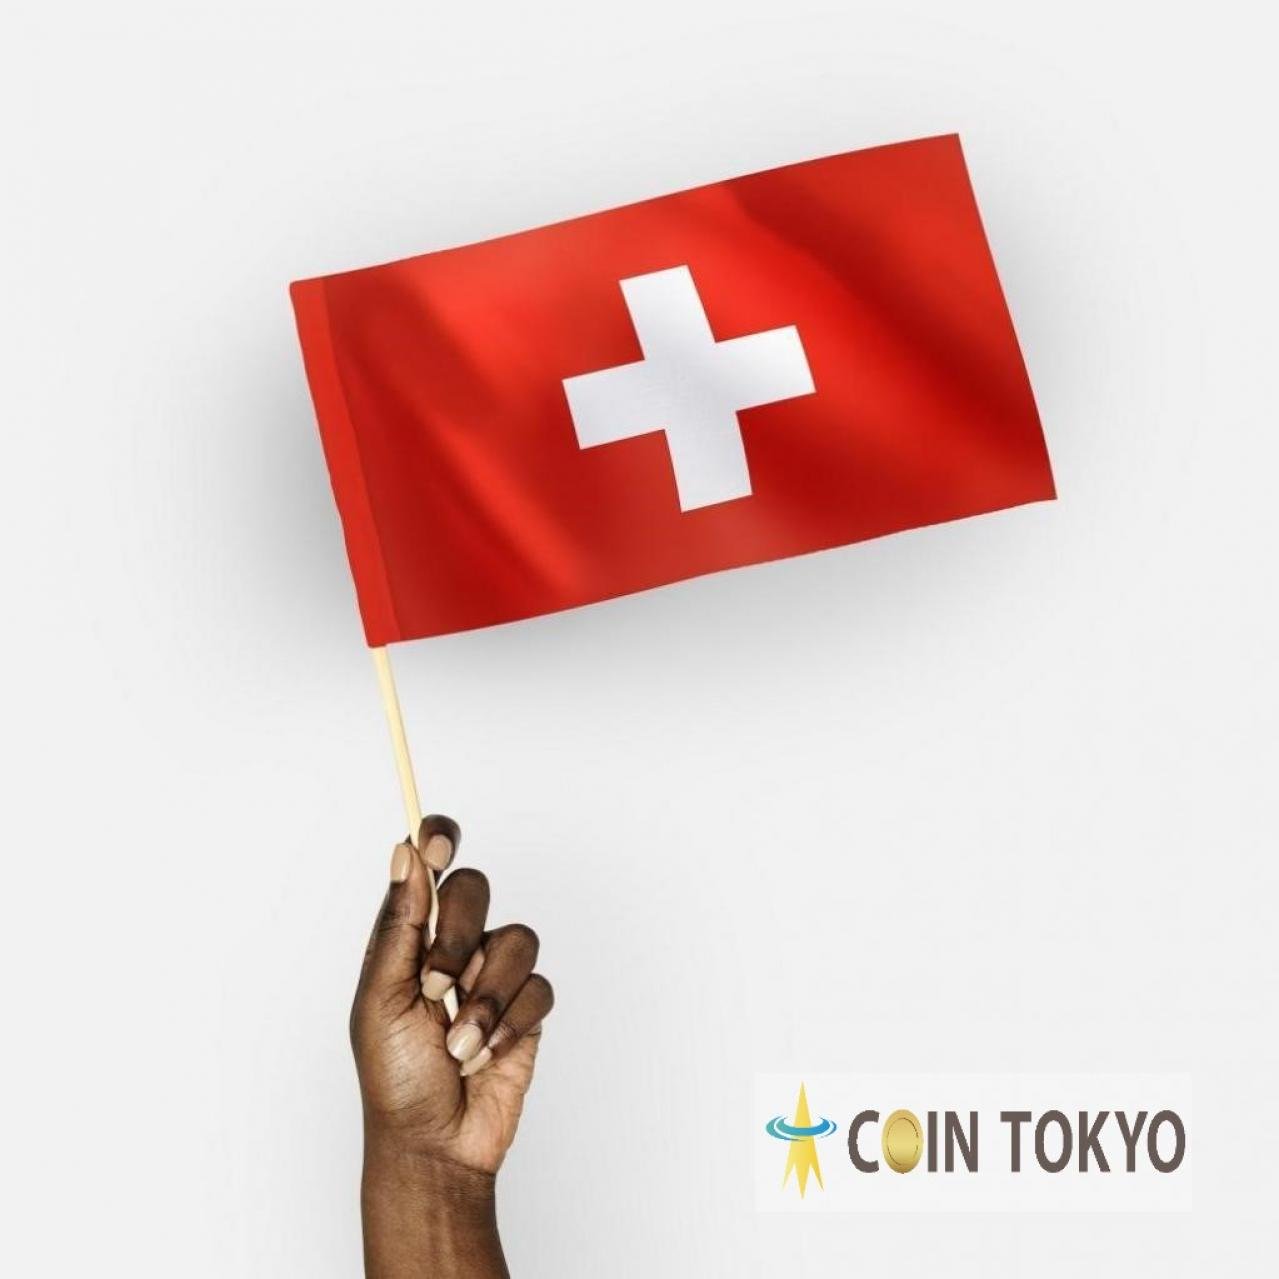 SEBA Bank在瑞士推出“虚拟货币银行” =向机构投资者+虚拟货币新闻网站Coin Tokyo提供可以管理加密货币和法定货币的银行帐户